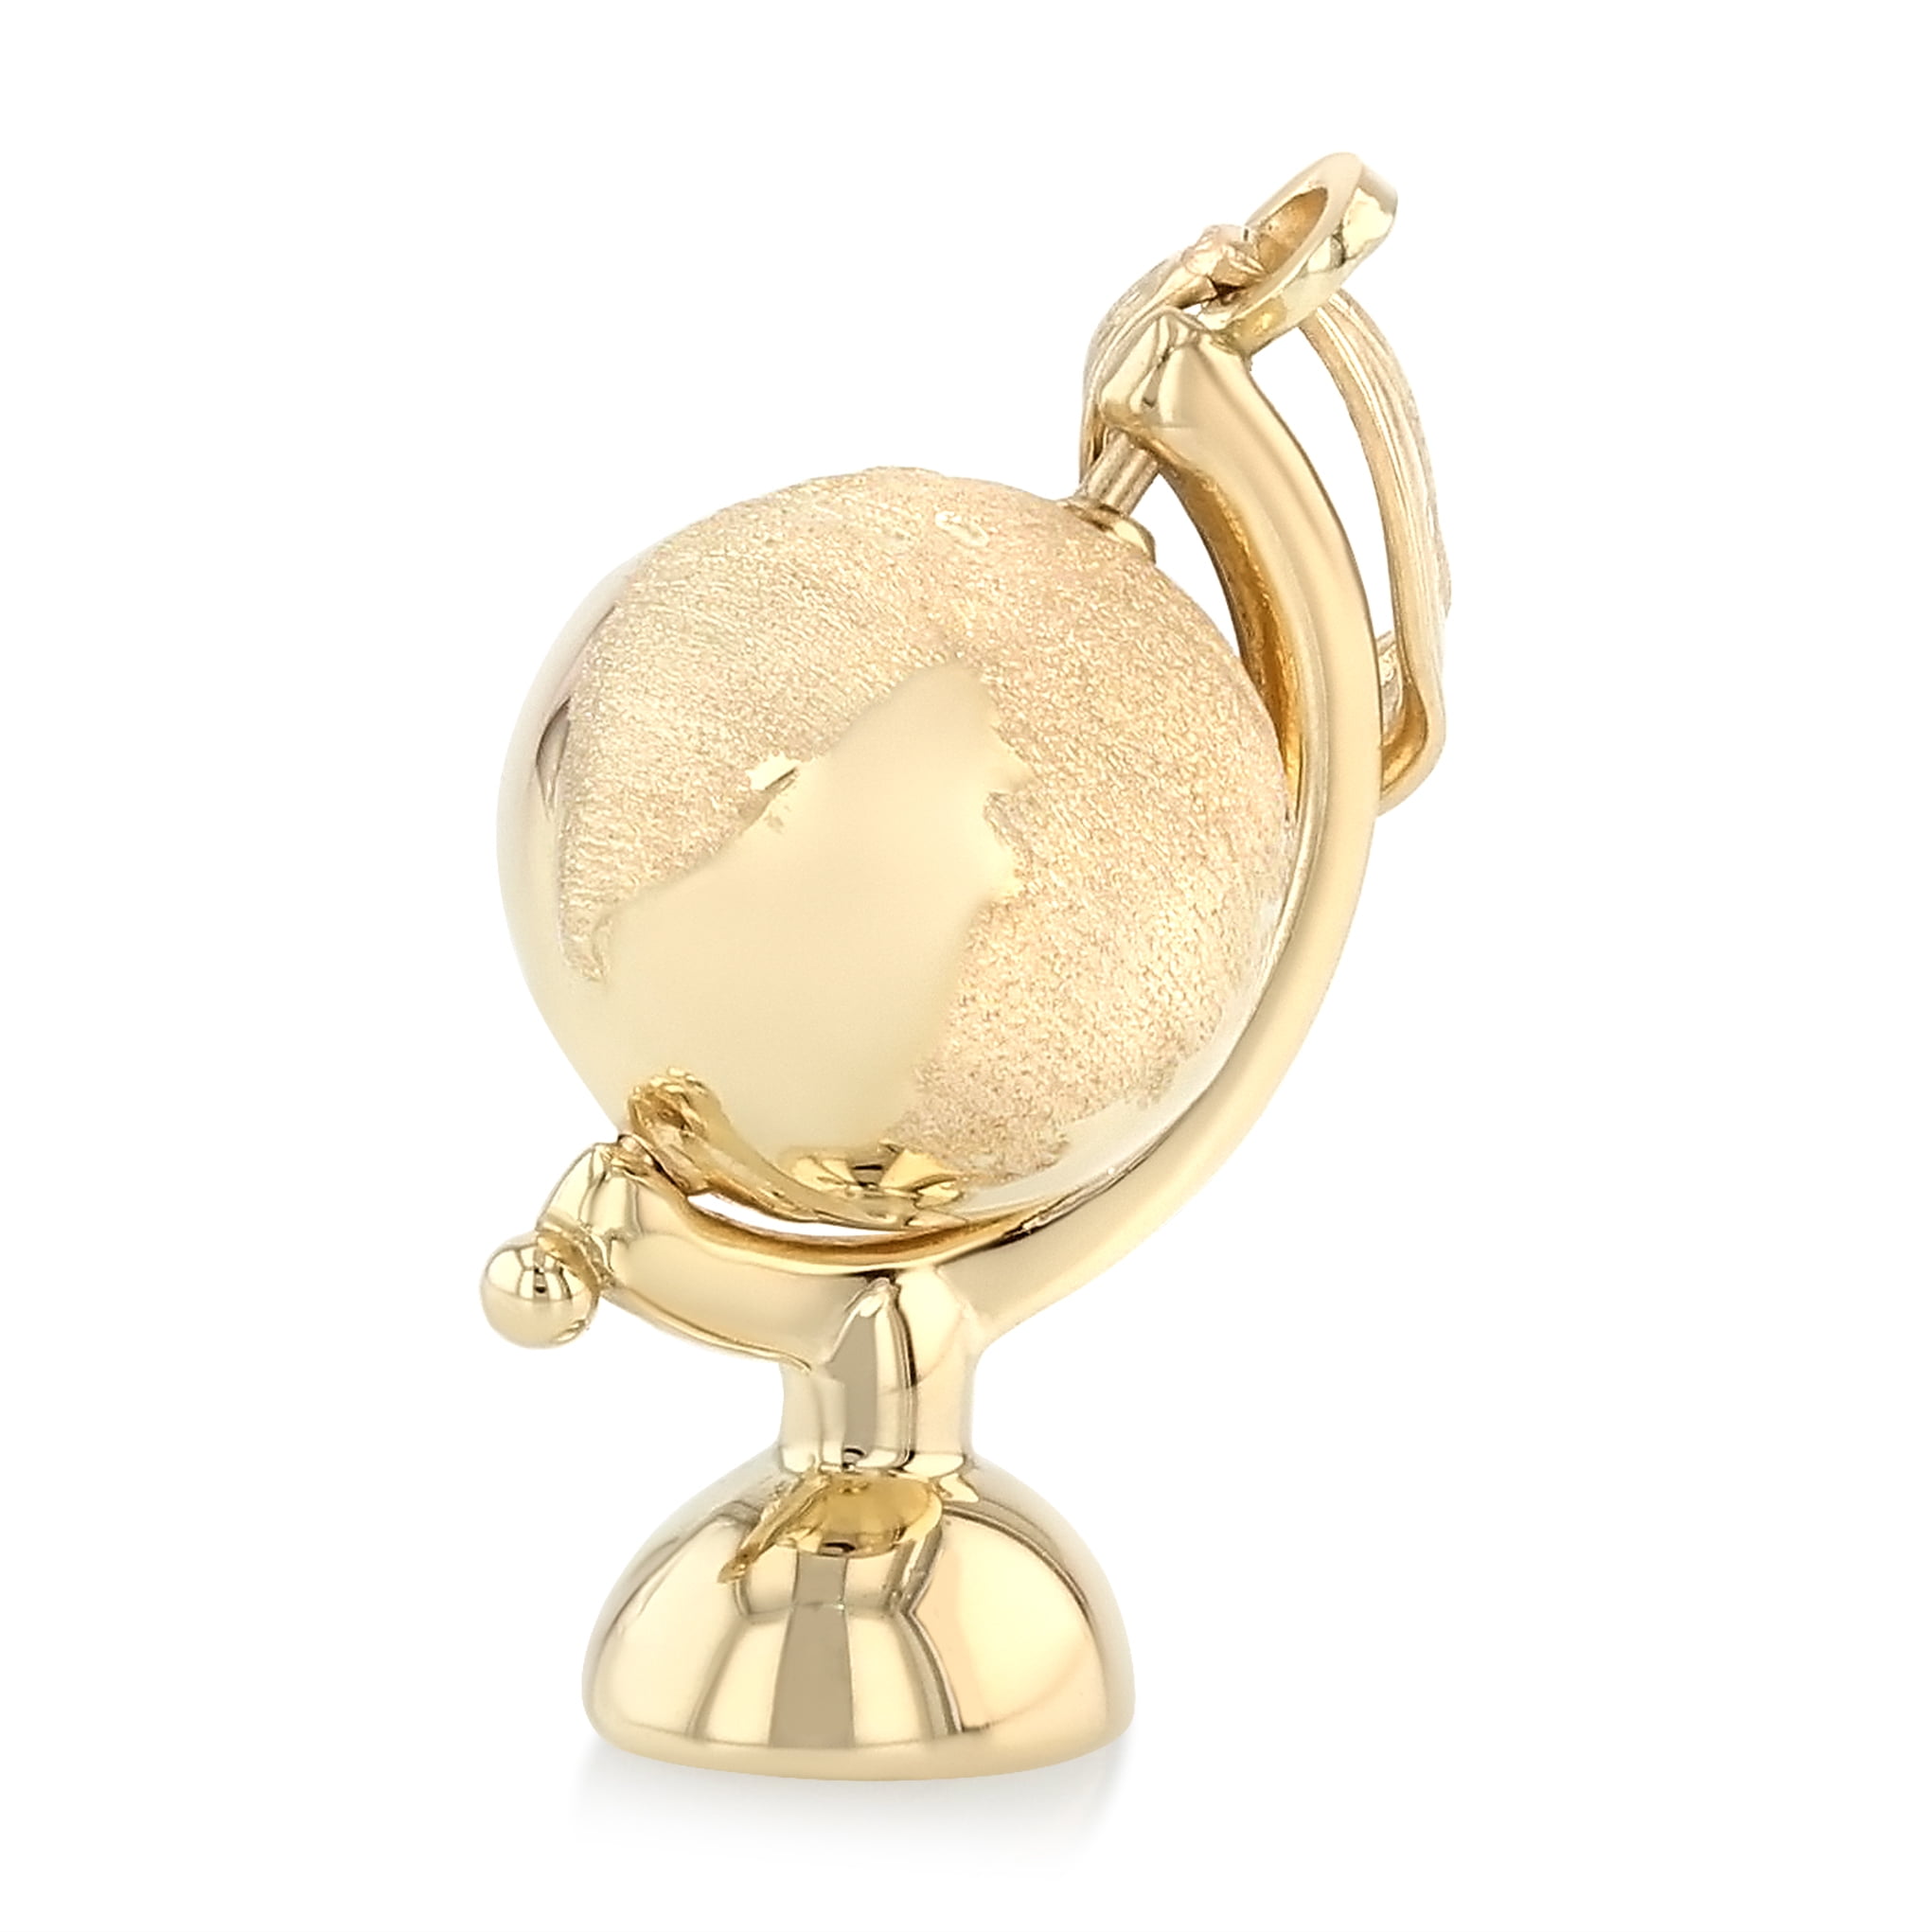 Ioka - 14K Yellow Gold Earth Globe Traveler's Charm Pendant For